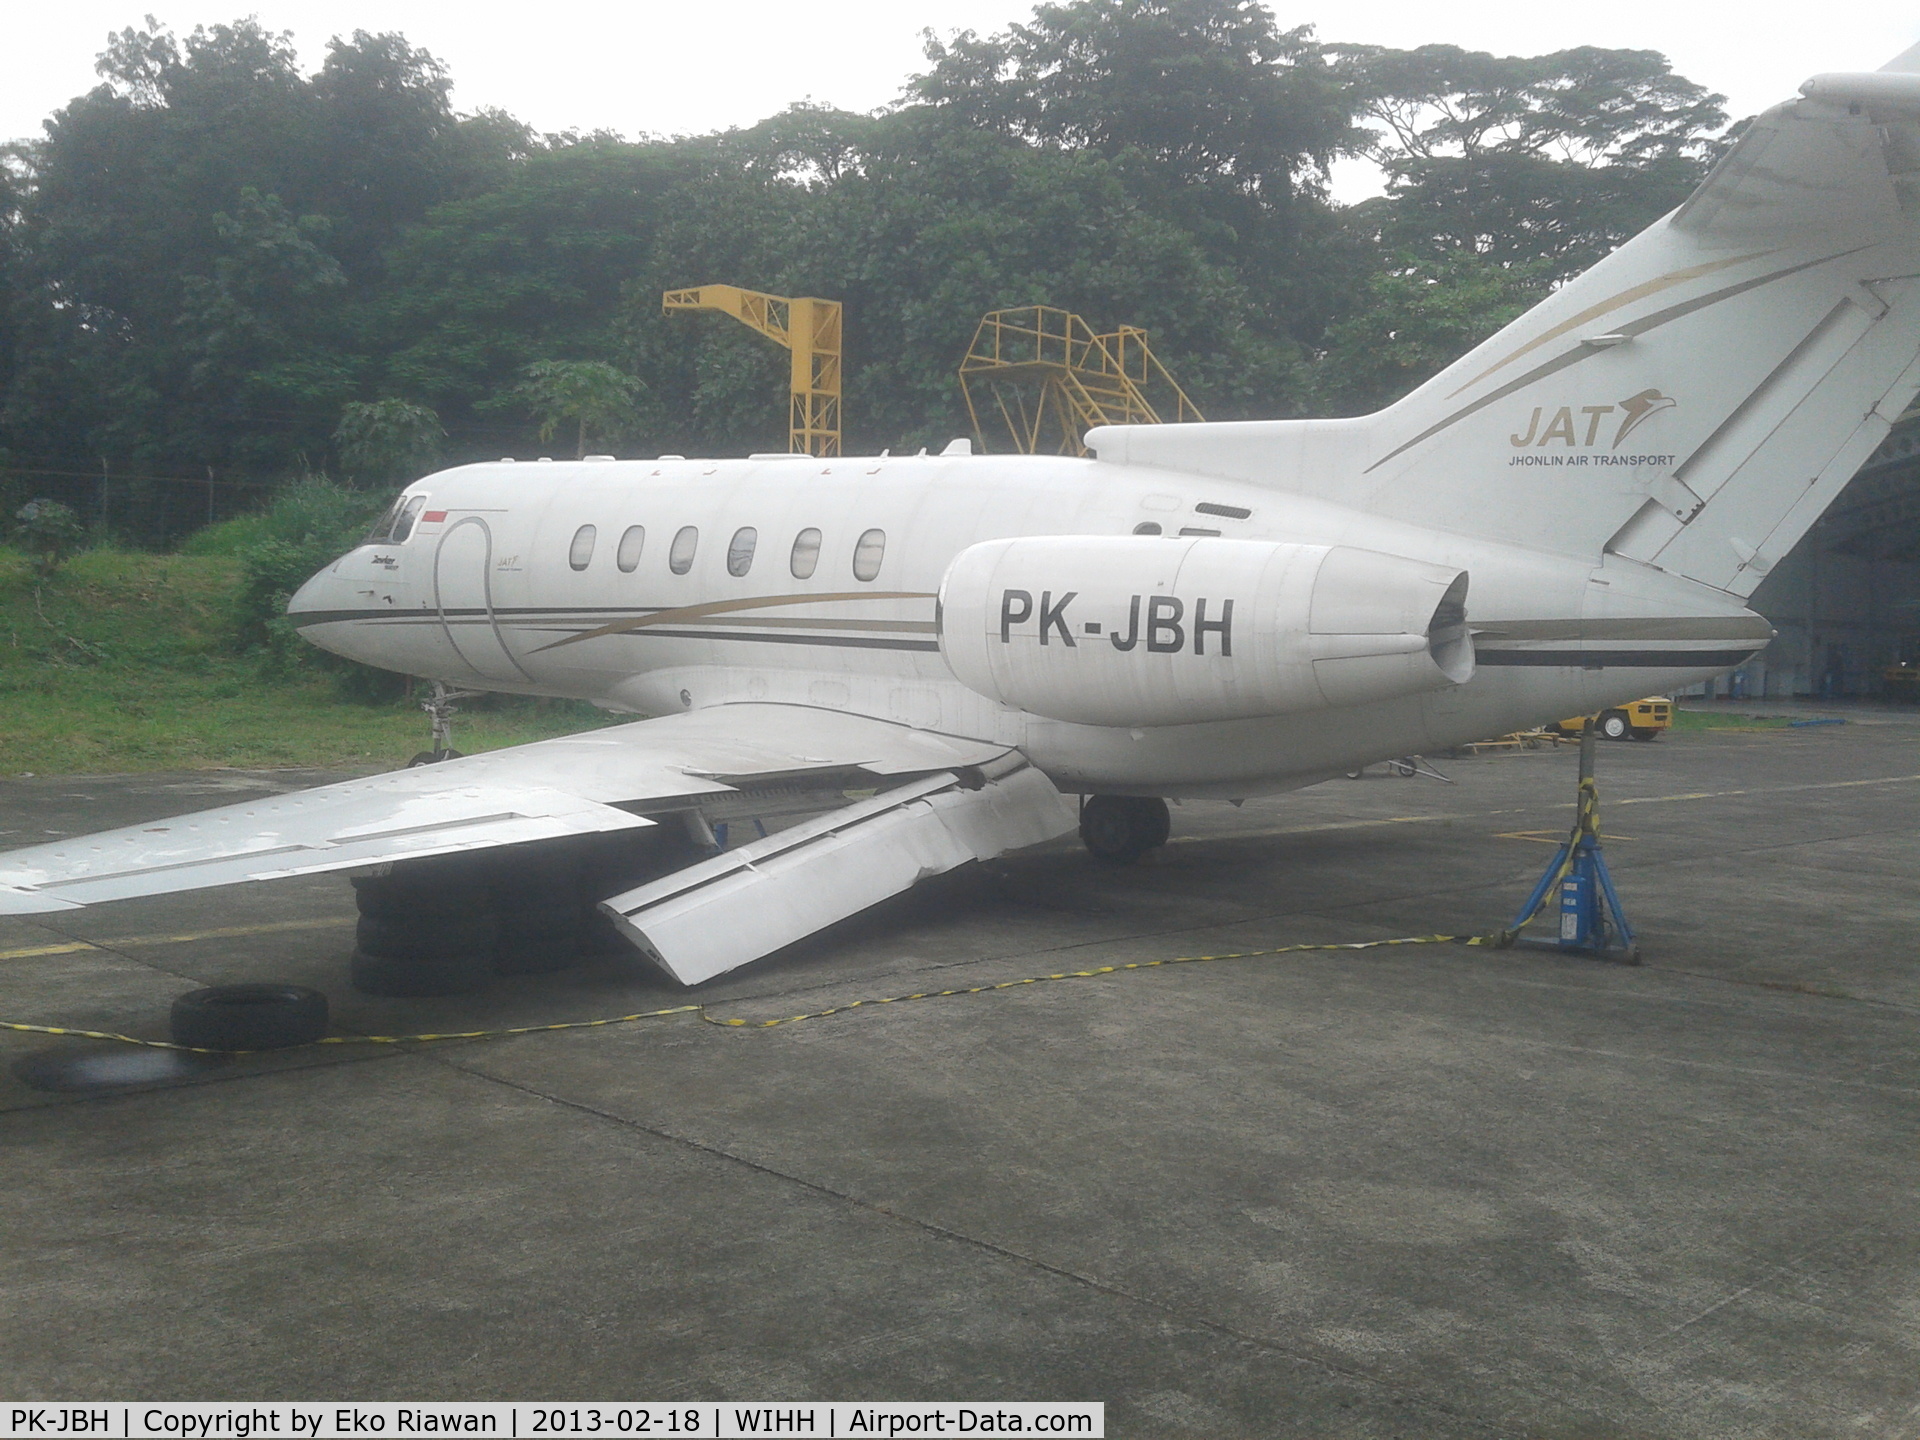 PK-JBH, , crashed on landing February 2013 in Halim airport, Jakarta